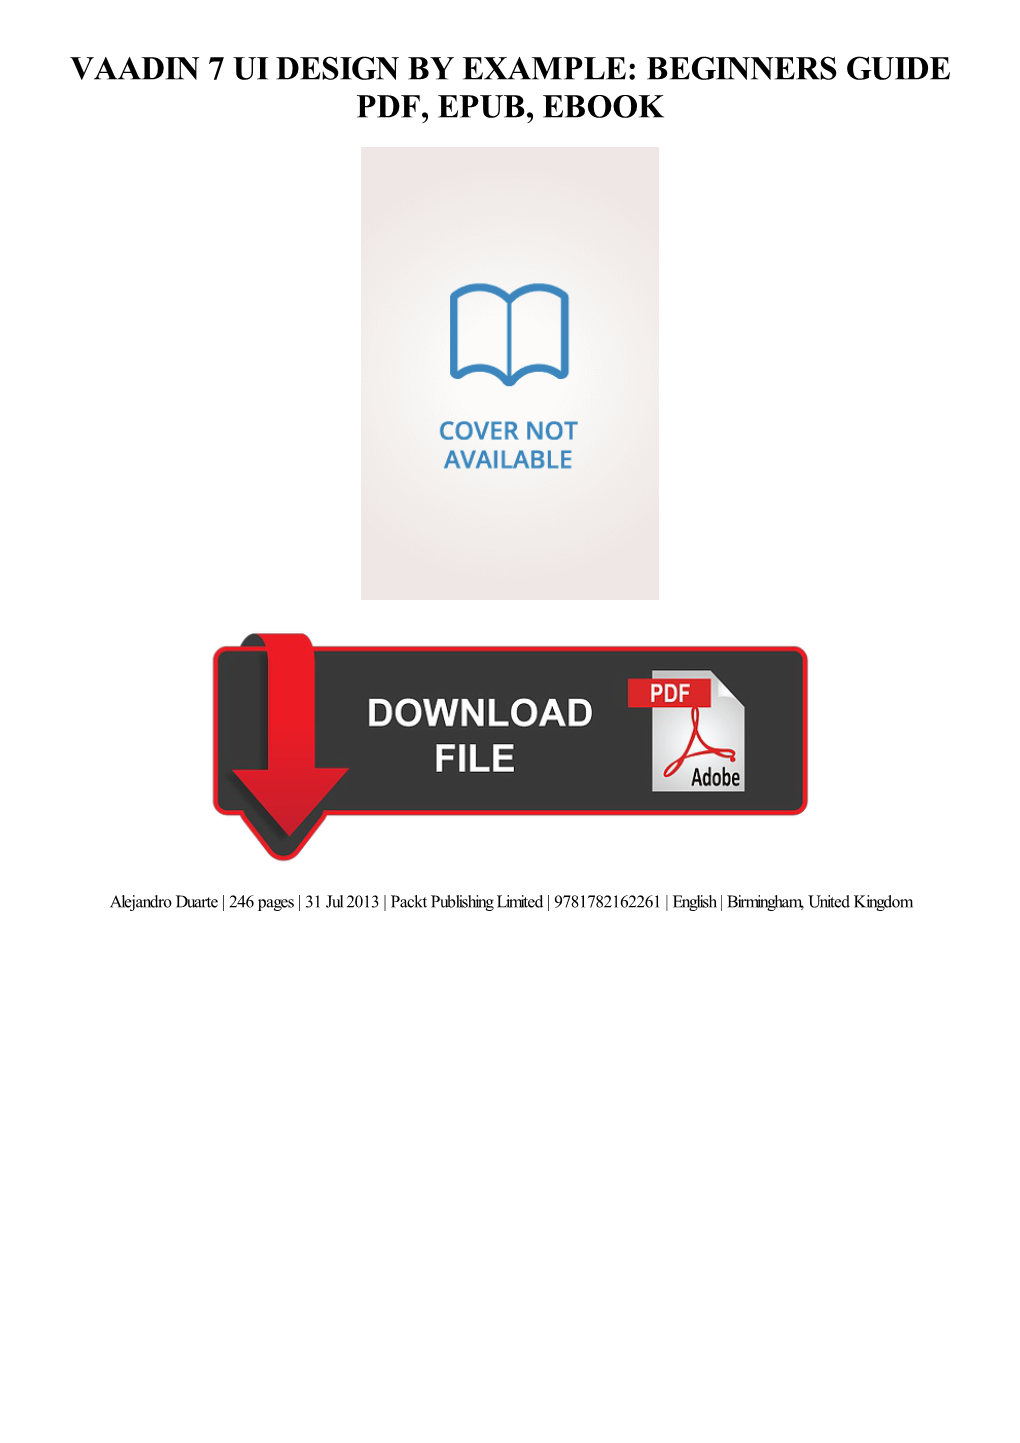 Read Book Vaadin 7 UI Design by Example: Beginners Guide Ebook